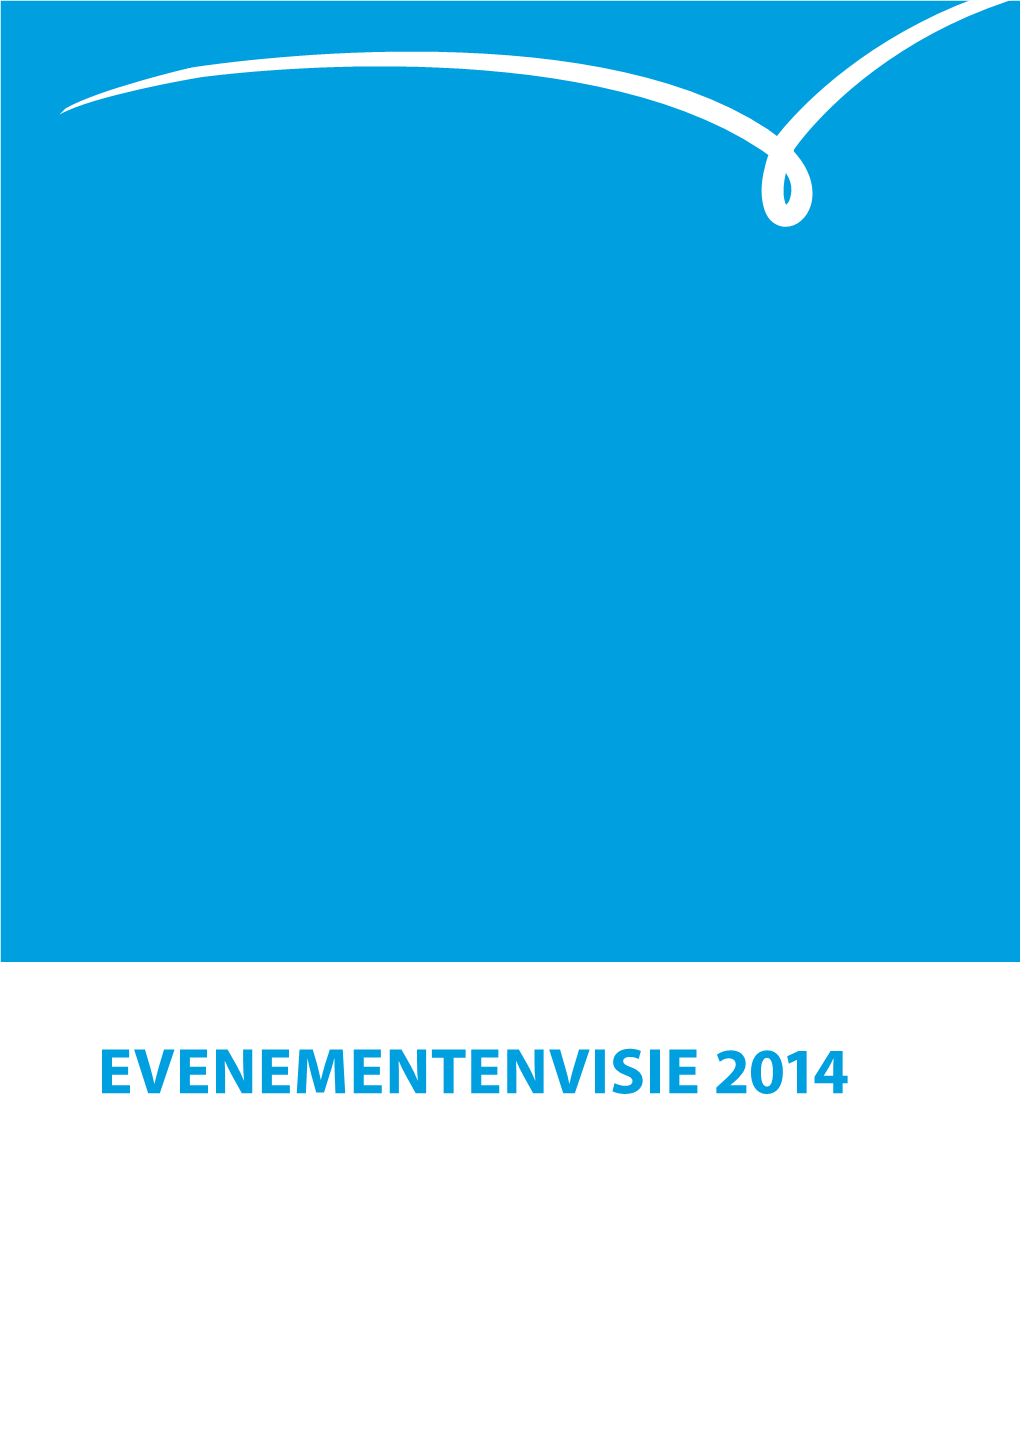 EVENEMENTENVISIE 2014 COLOFON Versie Juni 2014 Inhoud